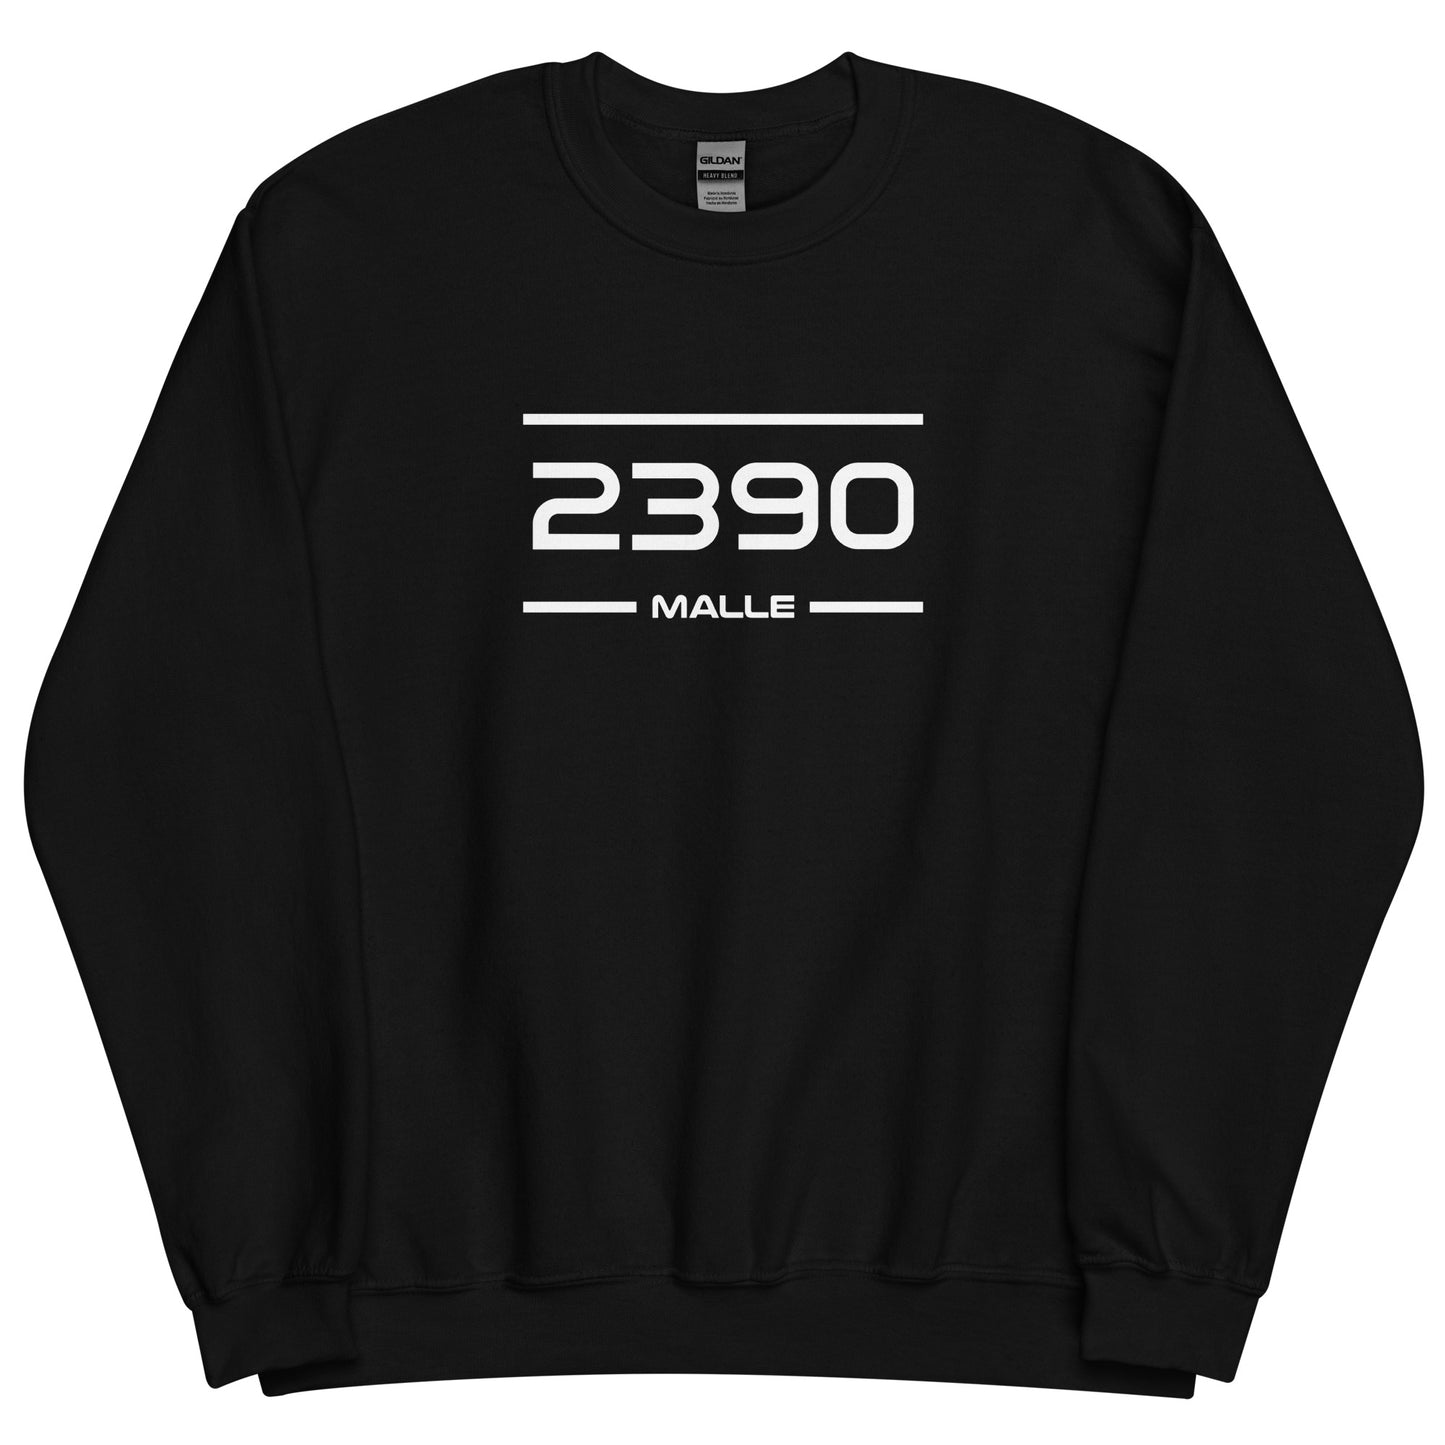 Sweater - 2390 - Malle (M/V)